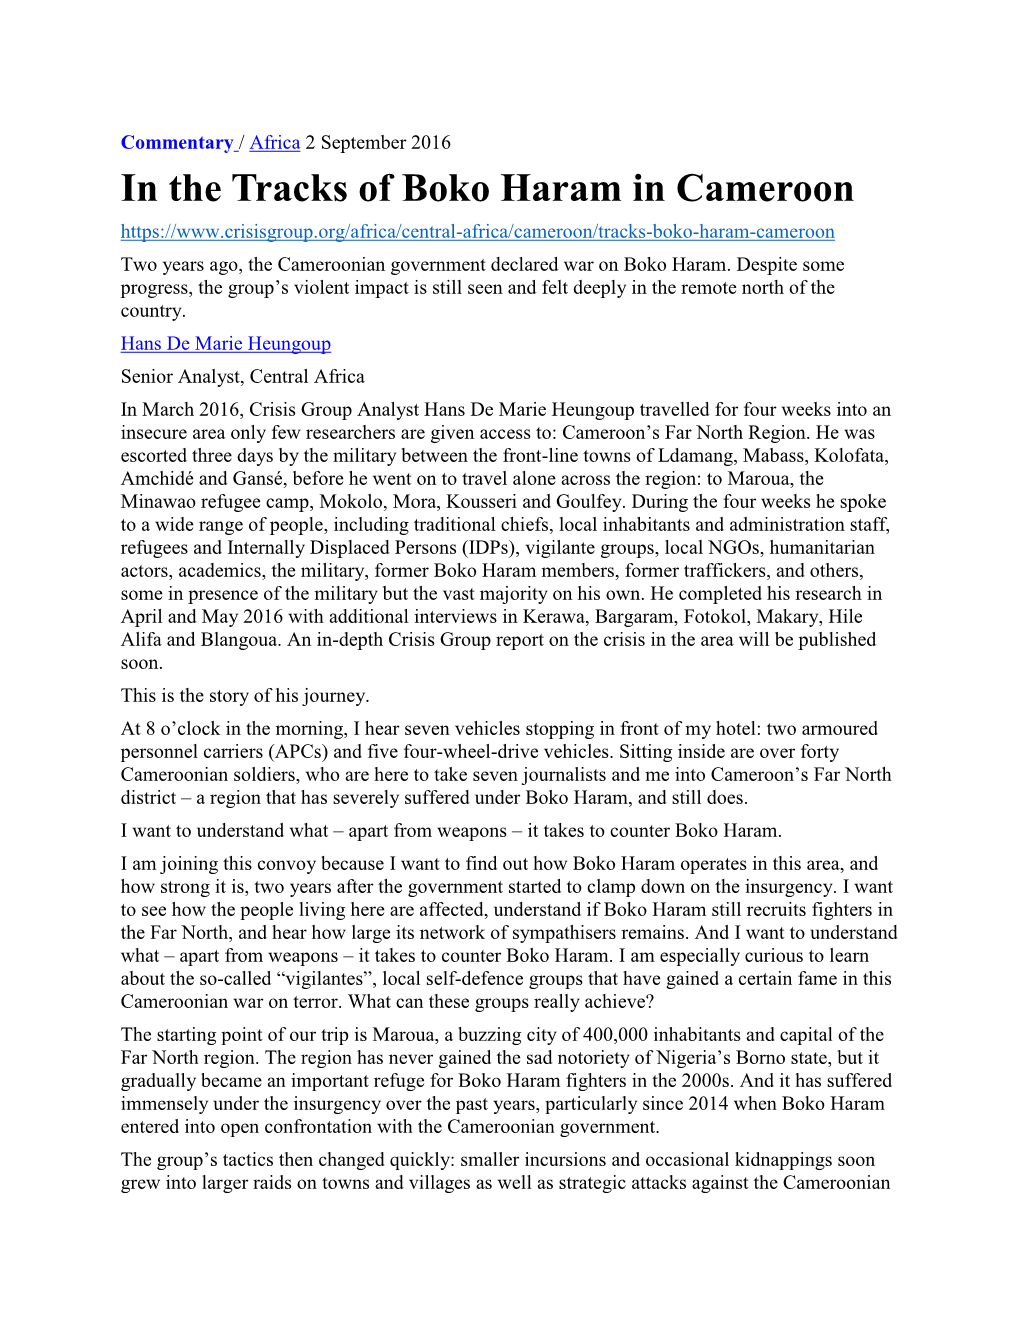 In the Tracks of Boko Haram in Cameroon